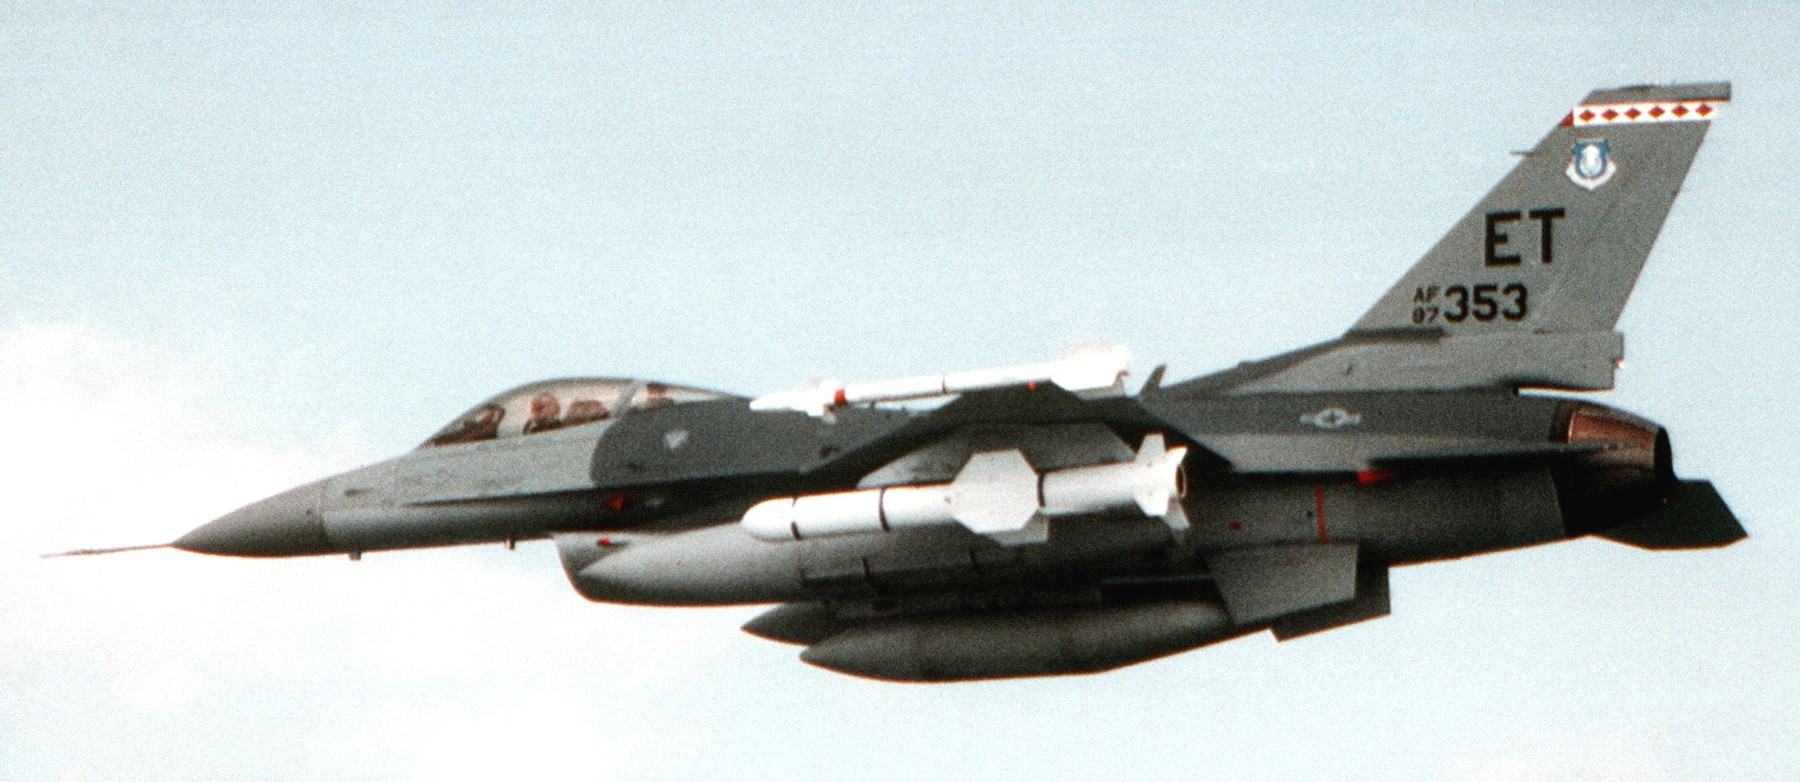 agm-84 harpoon ssm missile f-16 fighting falcon usaf 14